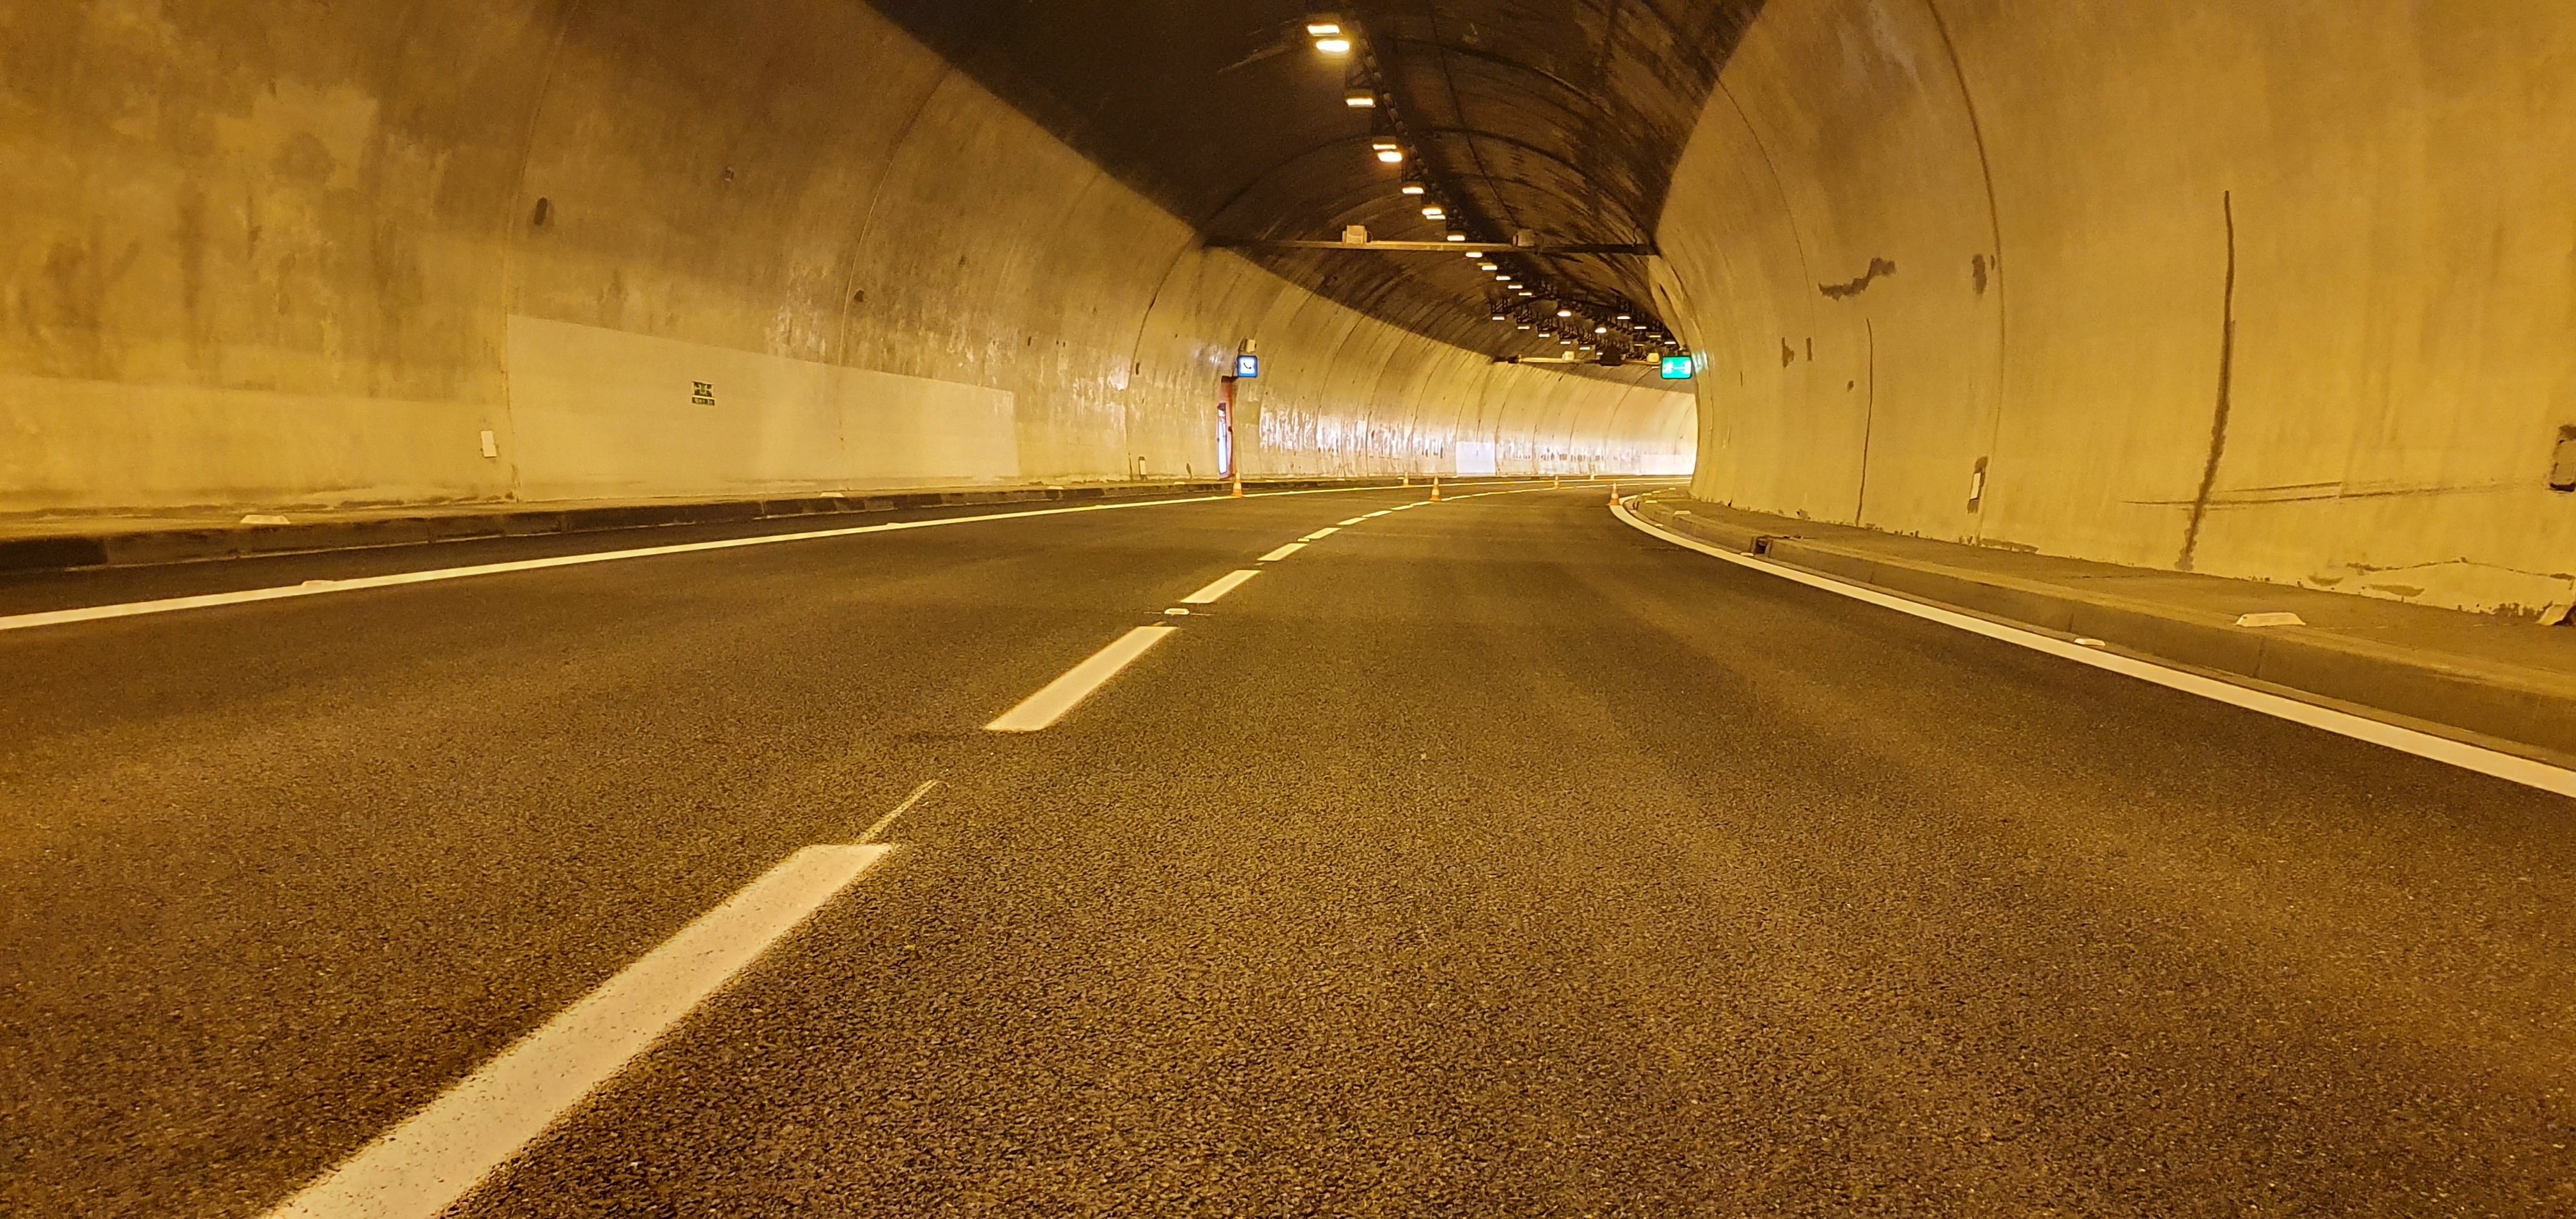 Silnice I/23 – rekonstrukce Pisáreckého tunelu - Construcția de drumuri & poduri